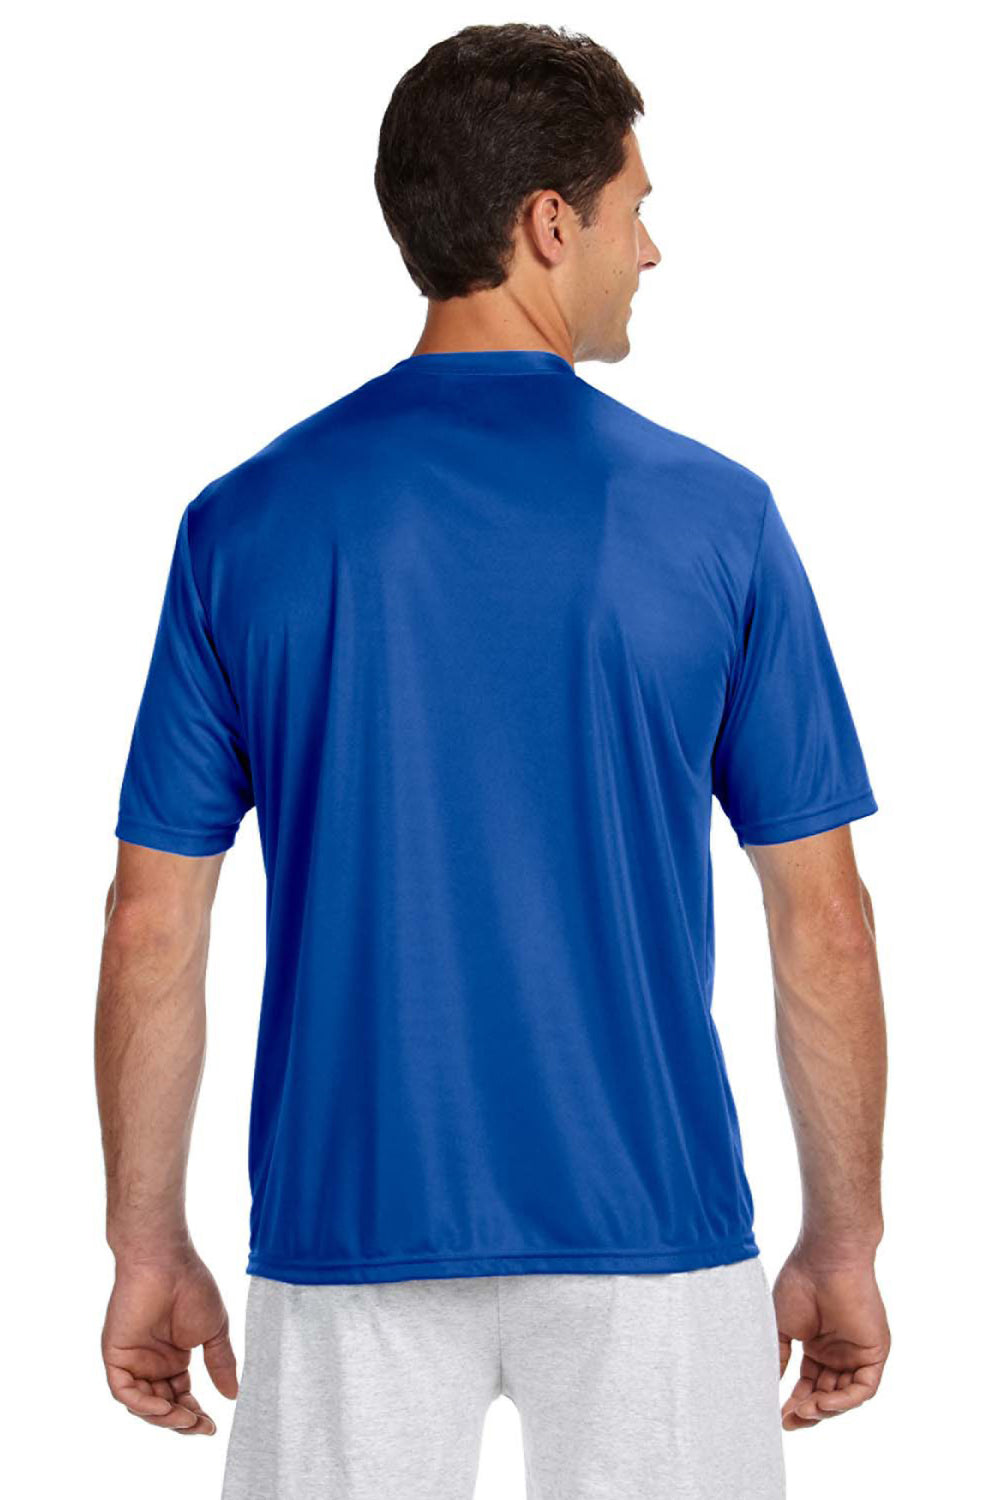 A4 N3142 Mens Performance Moisture Wicking Short Sleeve Crewneck T-Shirt Royal Blue Model Back